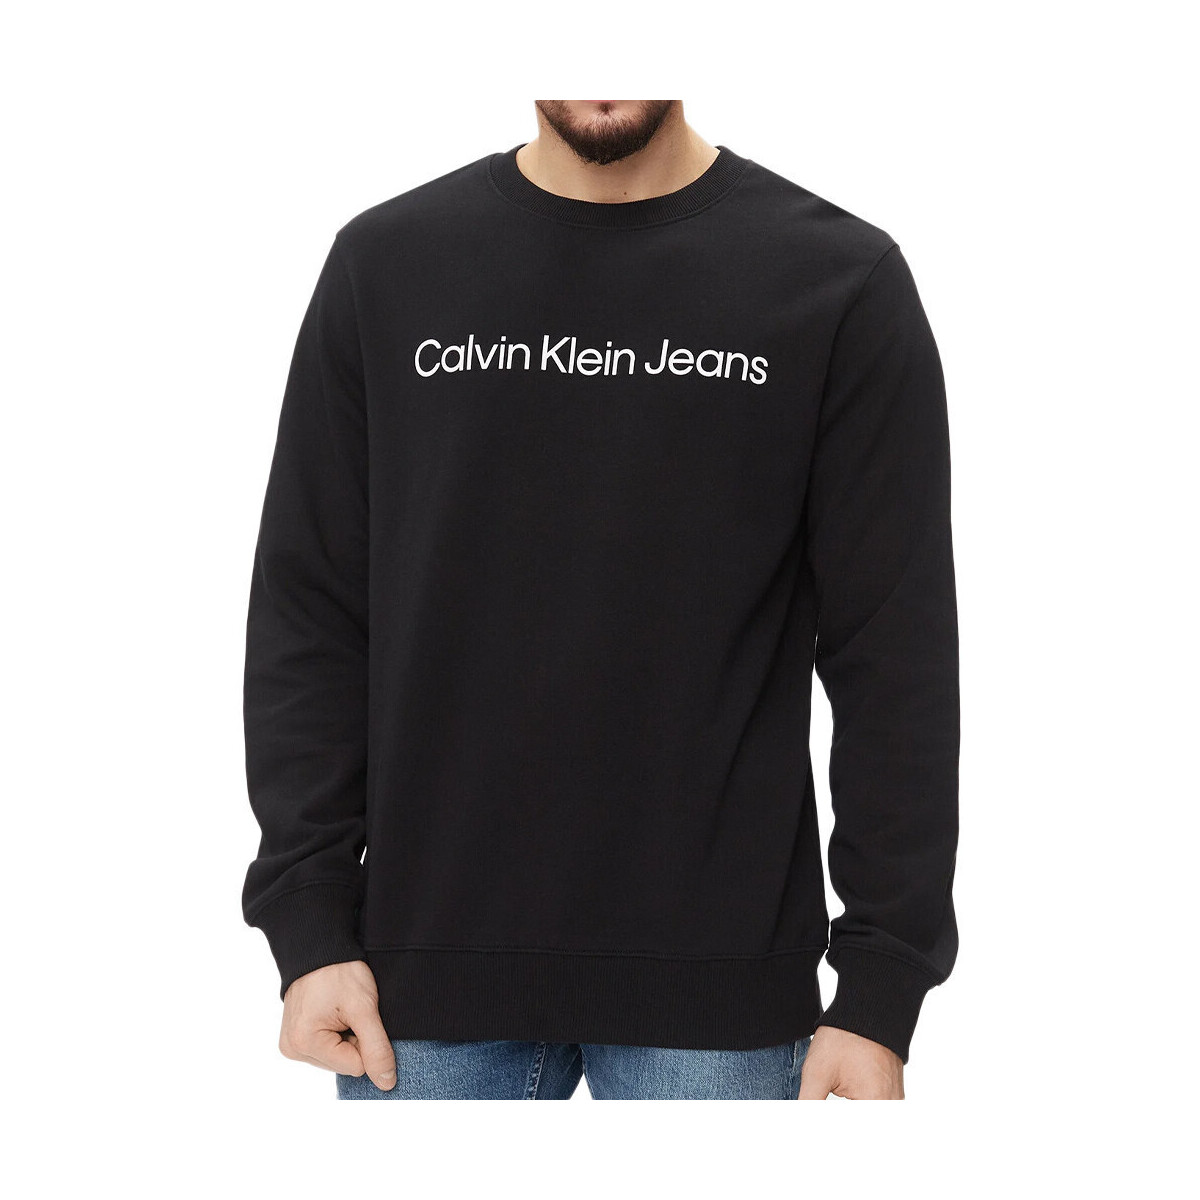 Textil Homem Sweats Calvin Klein Jeans  Preto